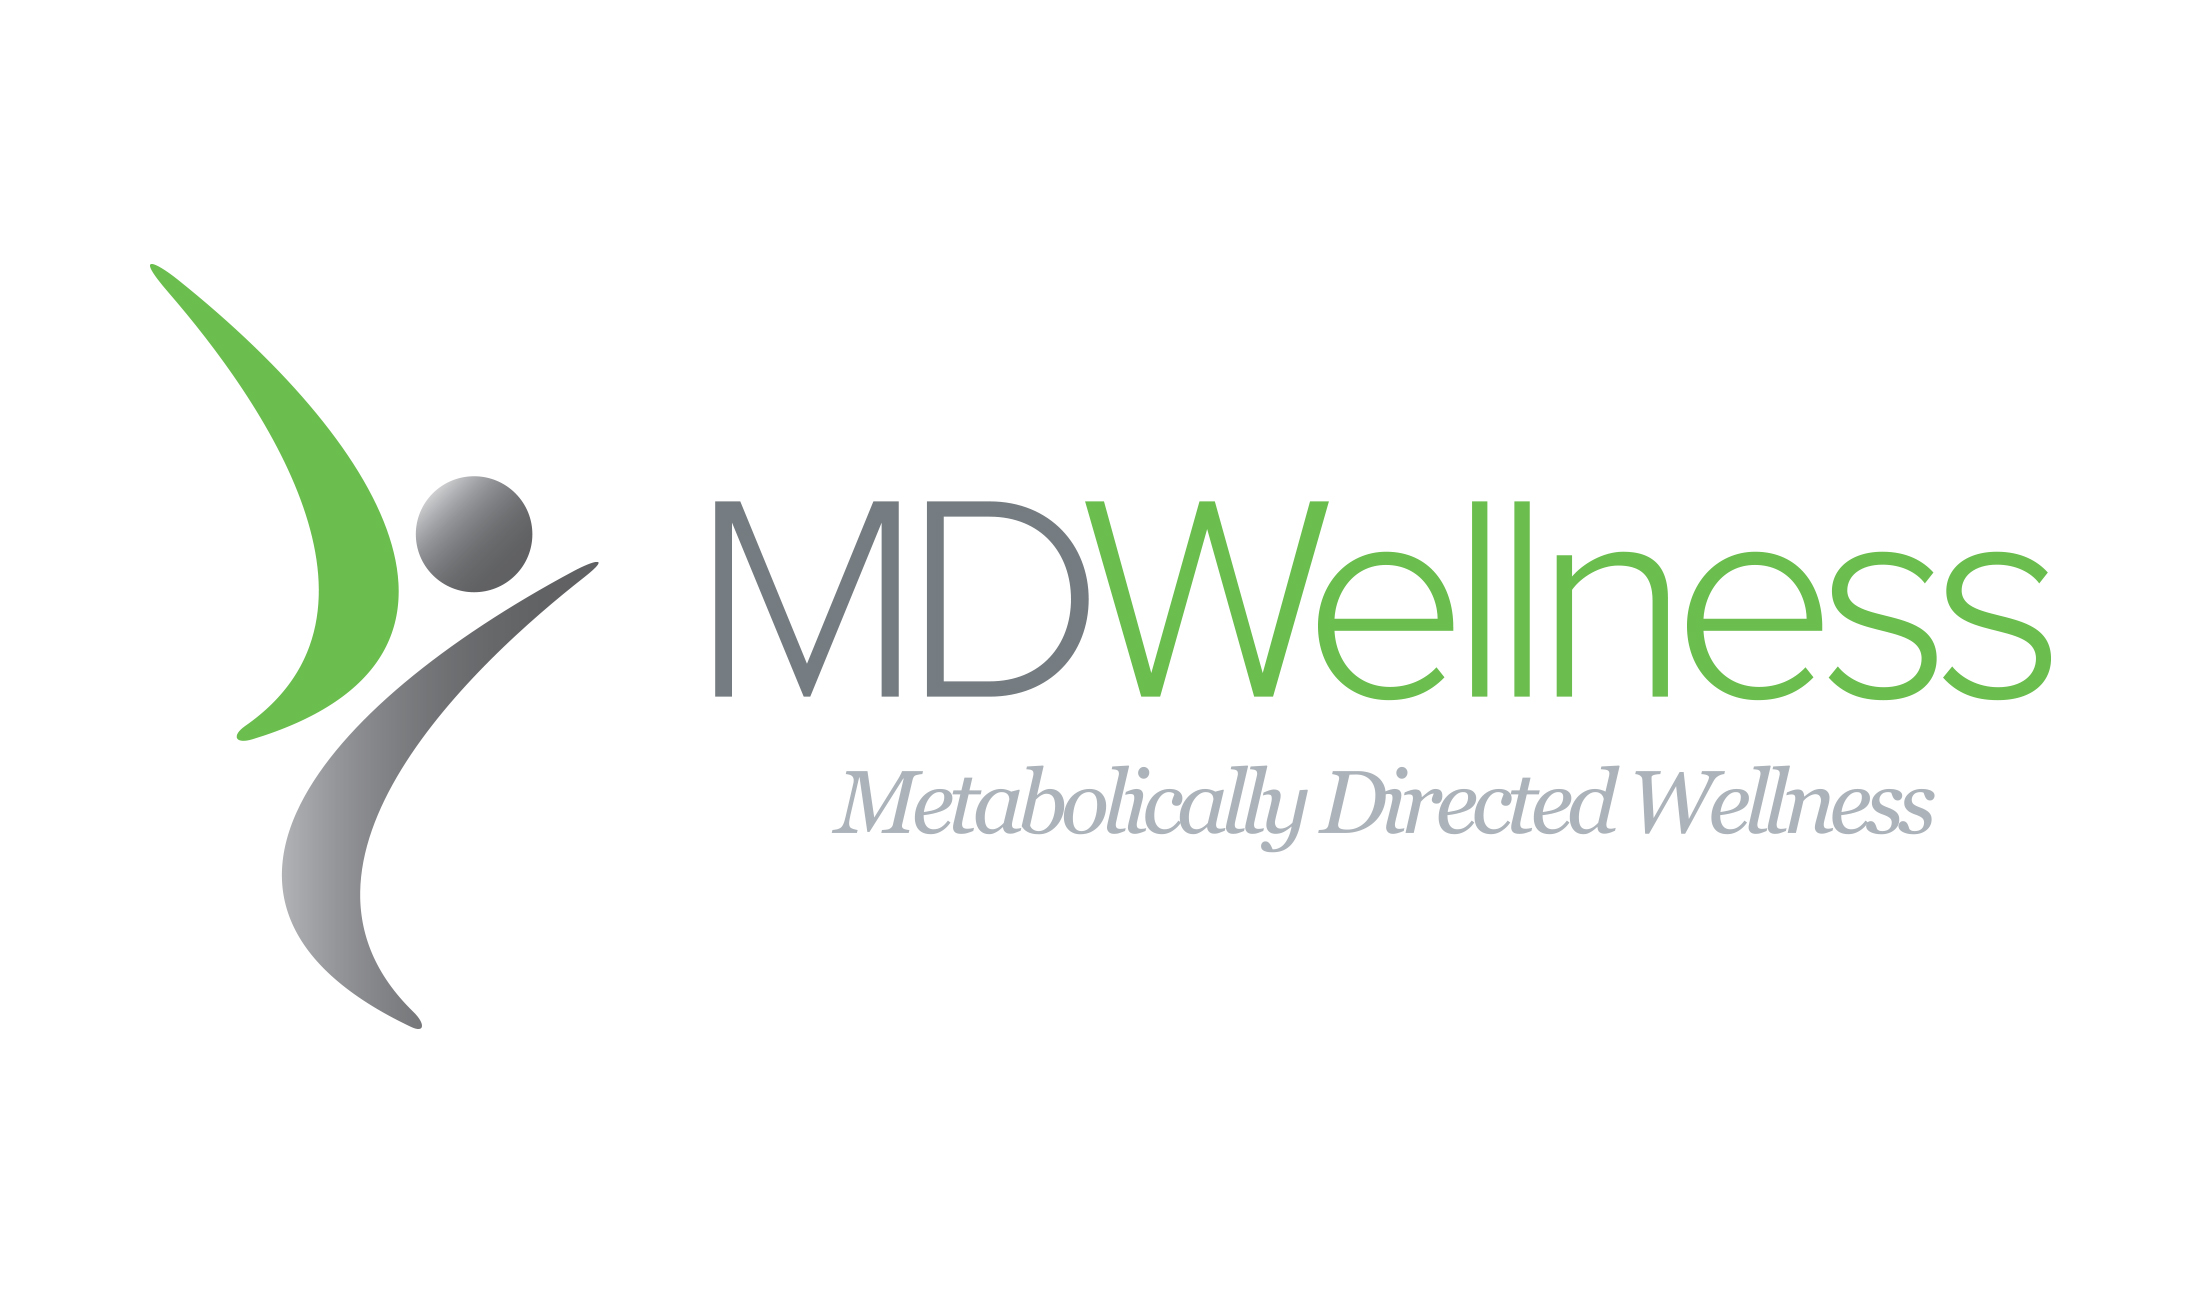 MDW Logo